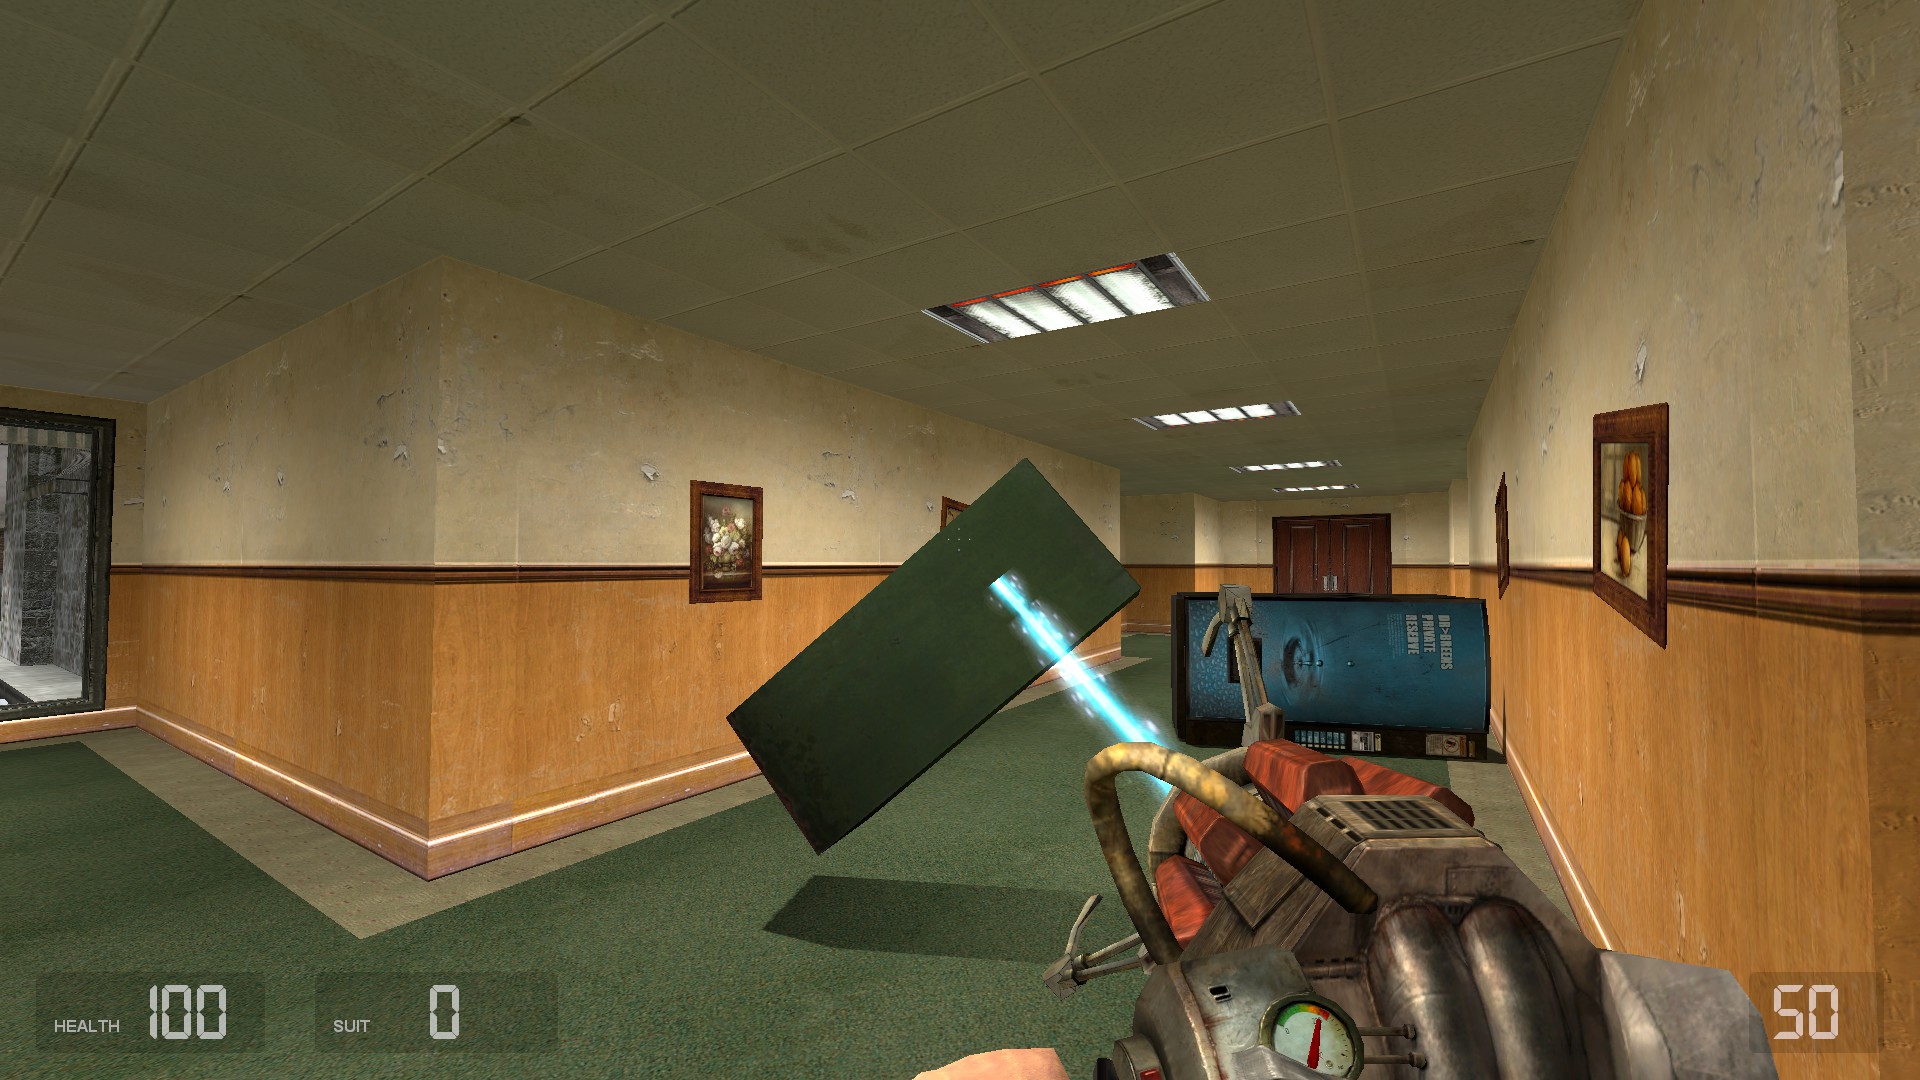 Physics Gun image - Kleiner Deathmatch mod for Half-Life 2